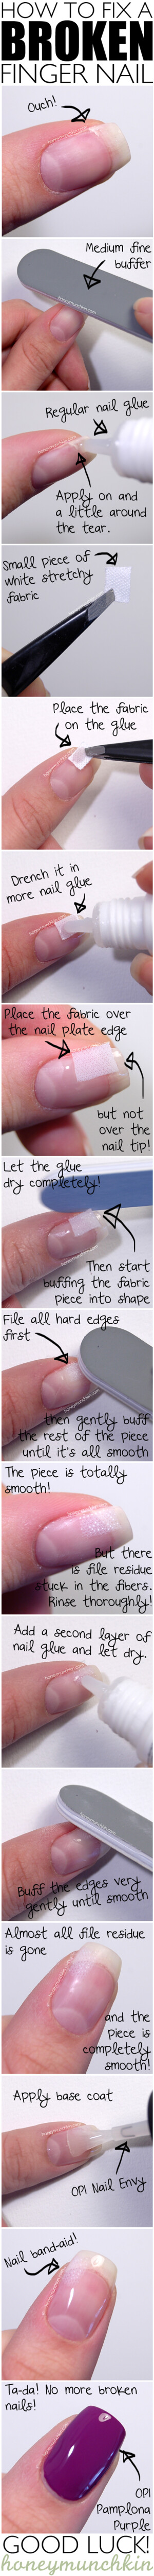 How to fix a broken finger nail tutorial by Honeymunchkin.com